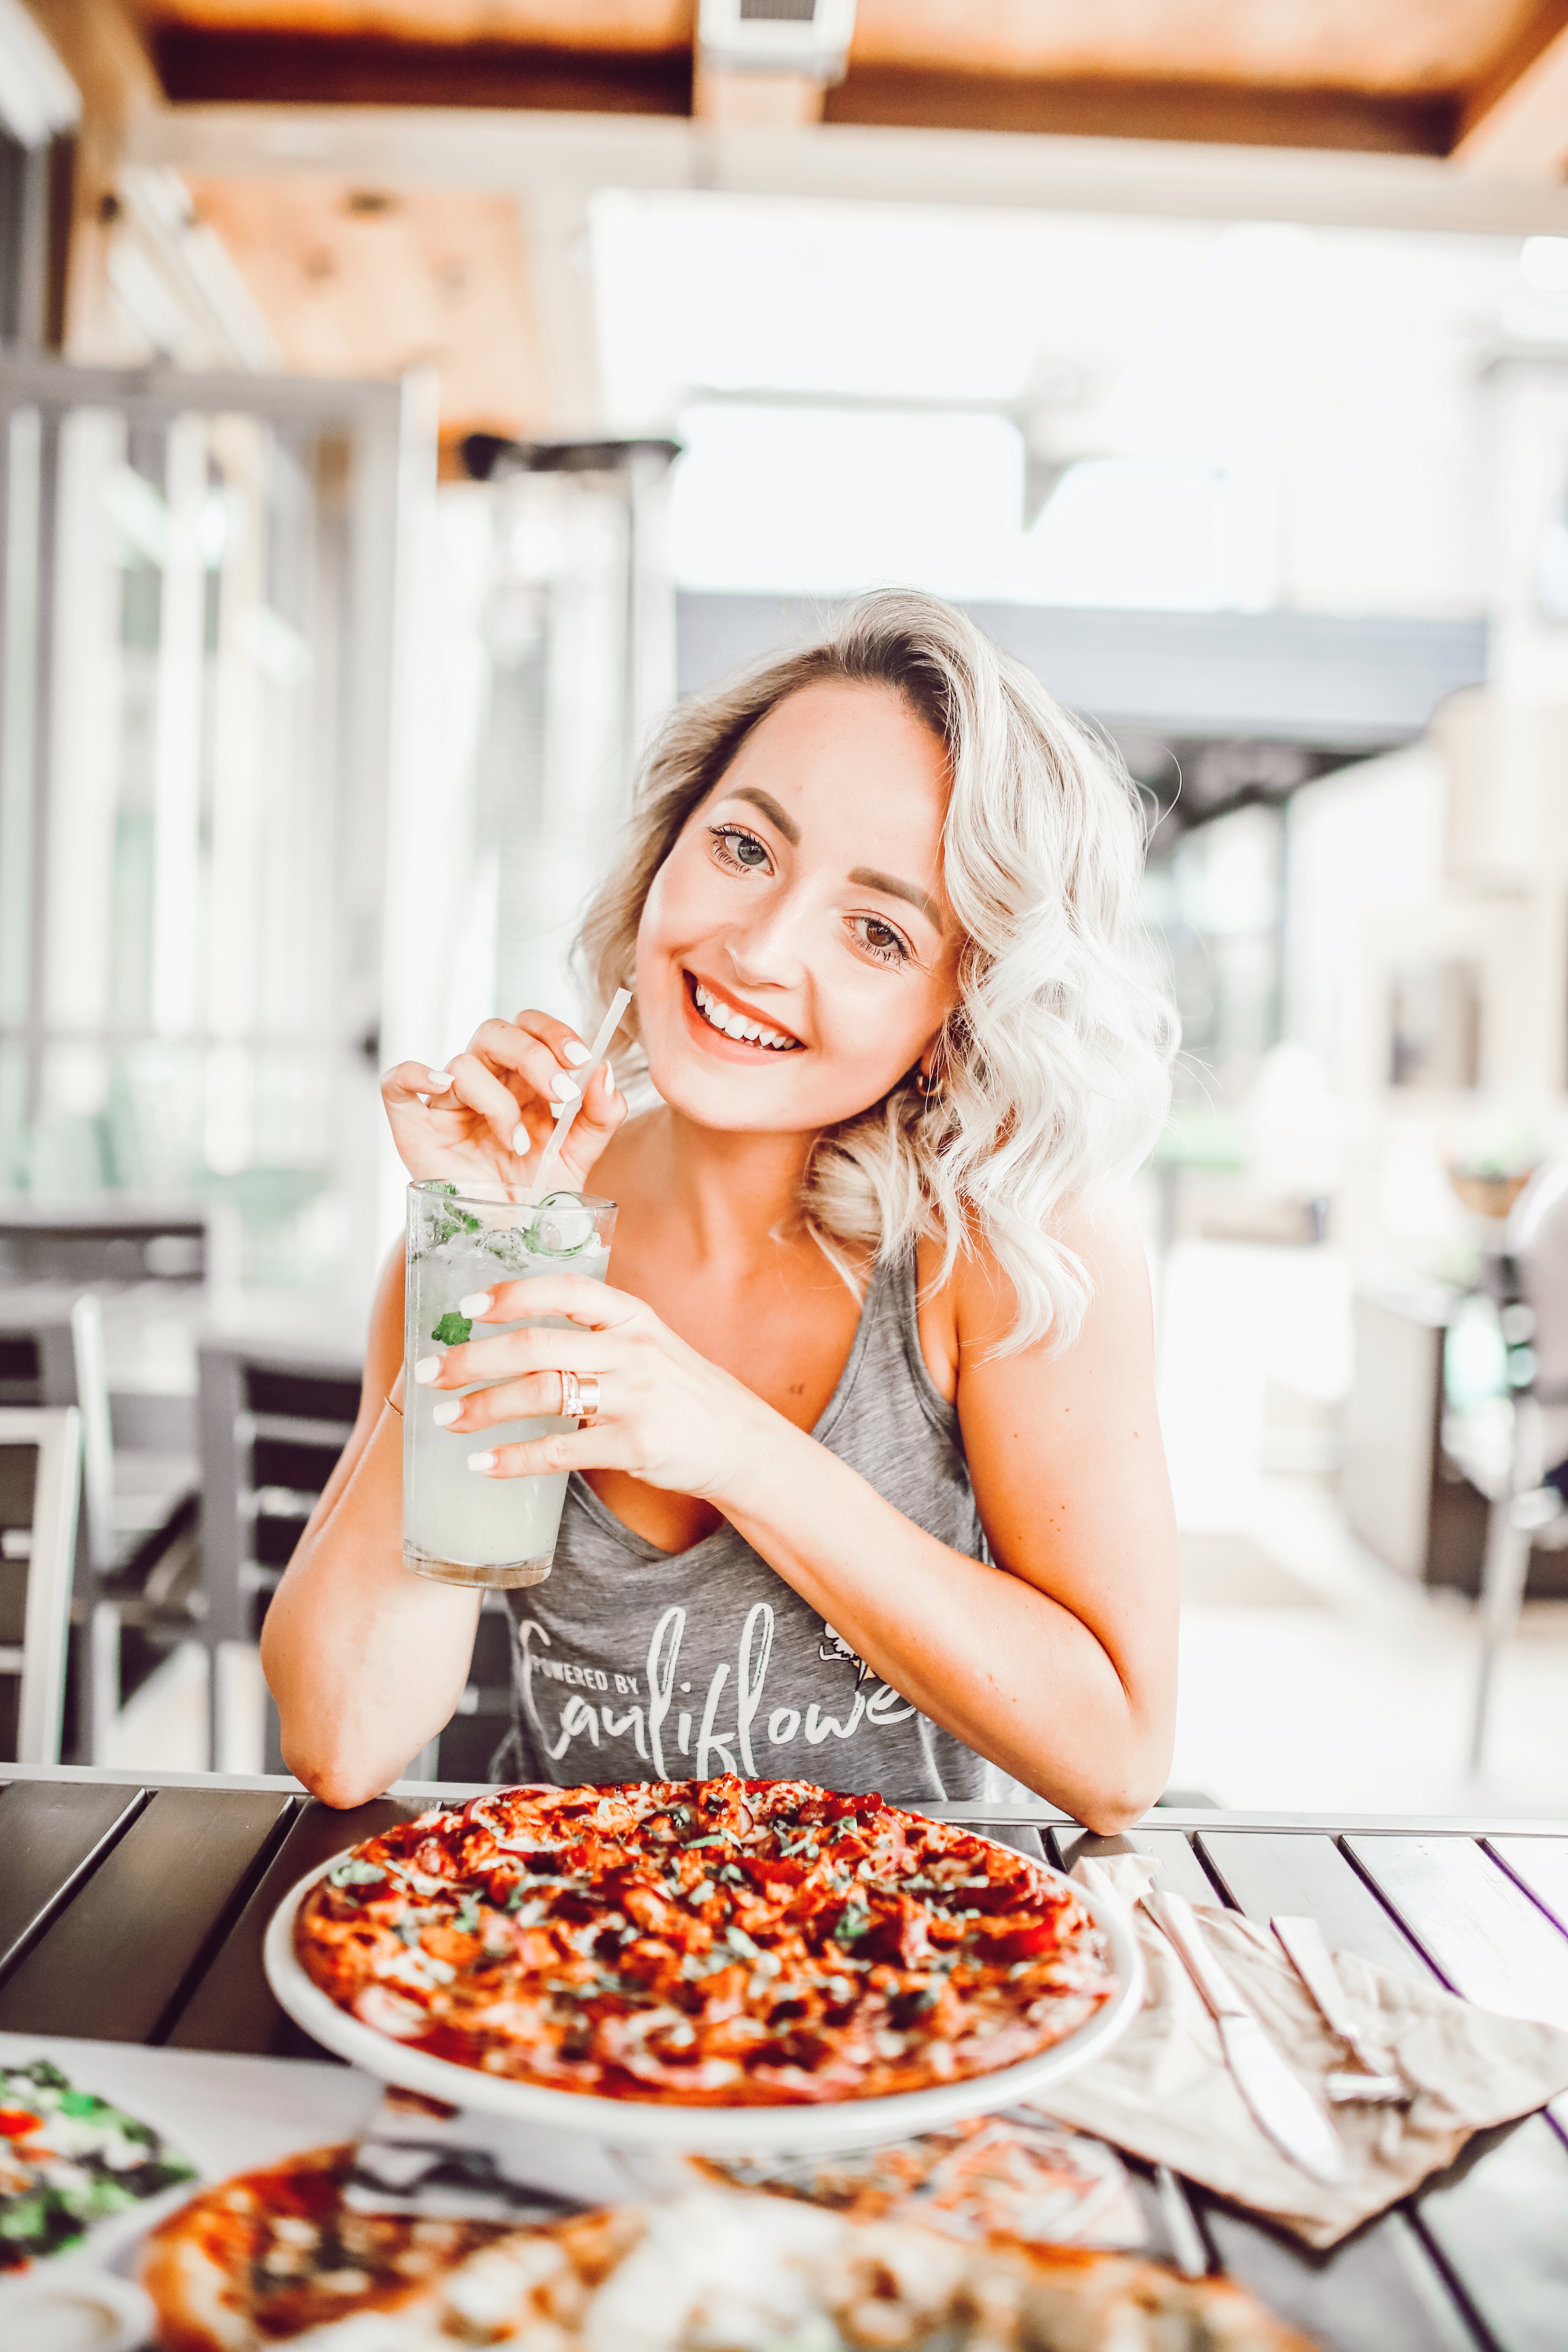 Alena Gidenko of modaprints.com shares her experience eating the new Cauliflower pizza crust